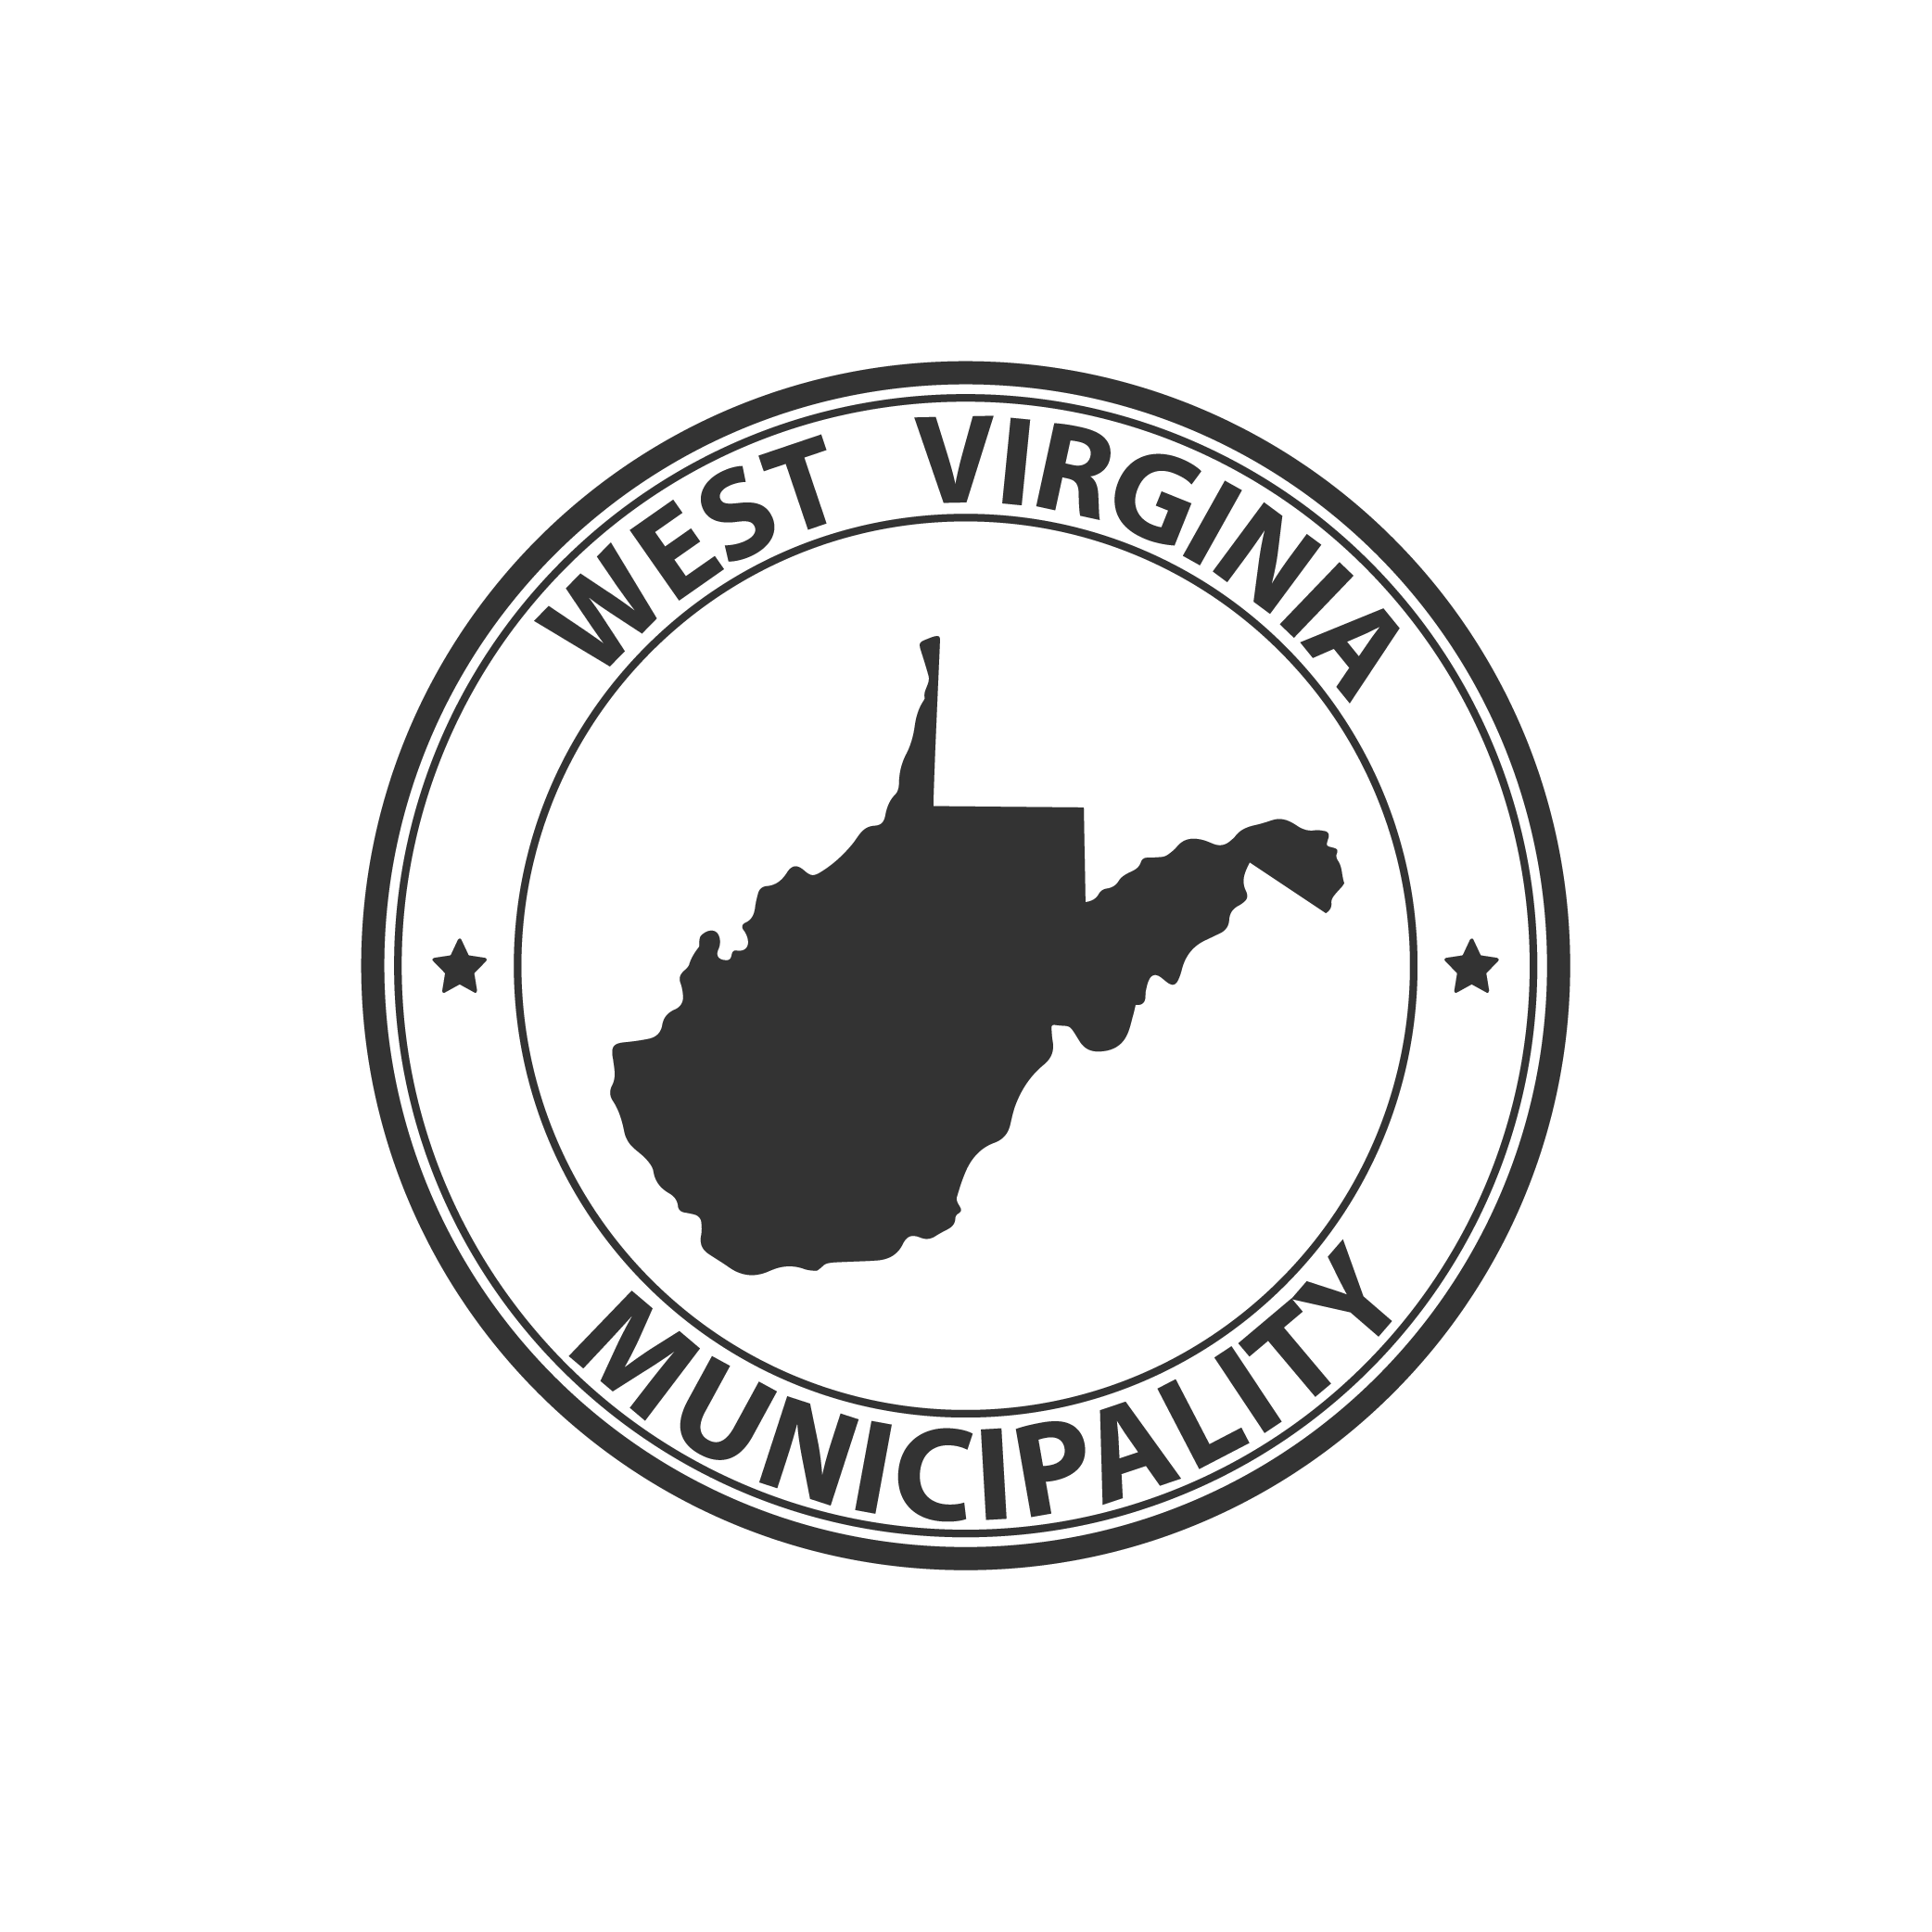 West Virginia Municipality Logo